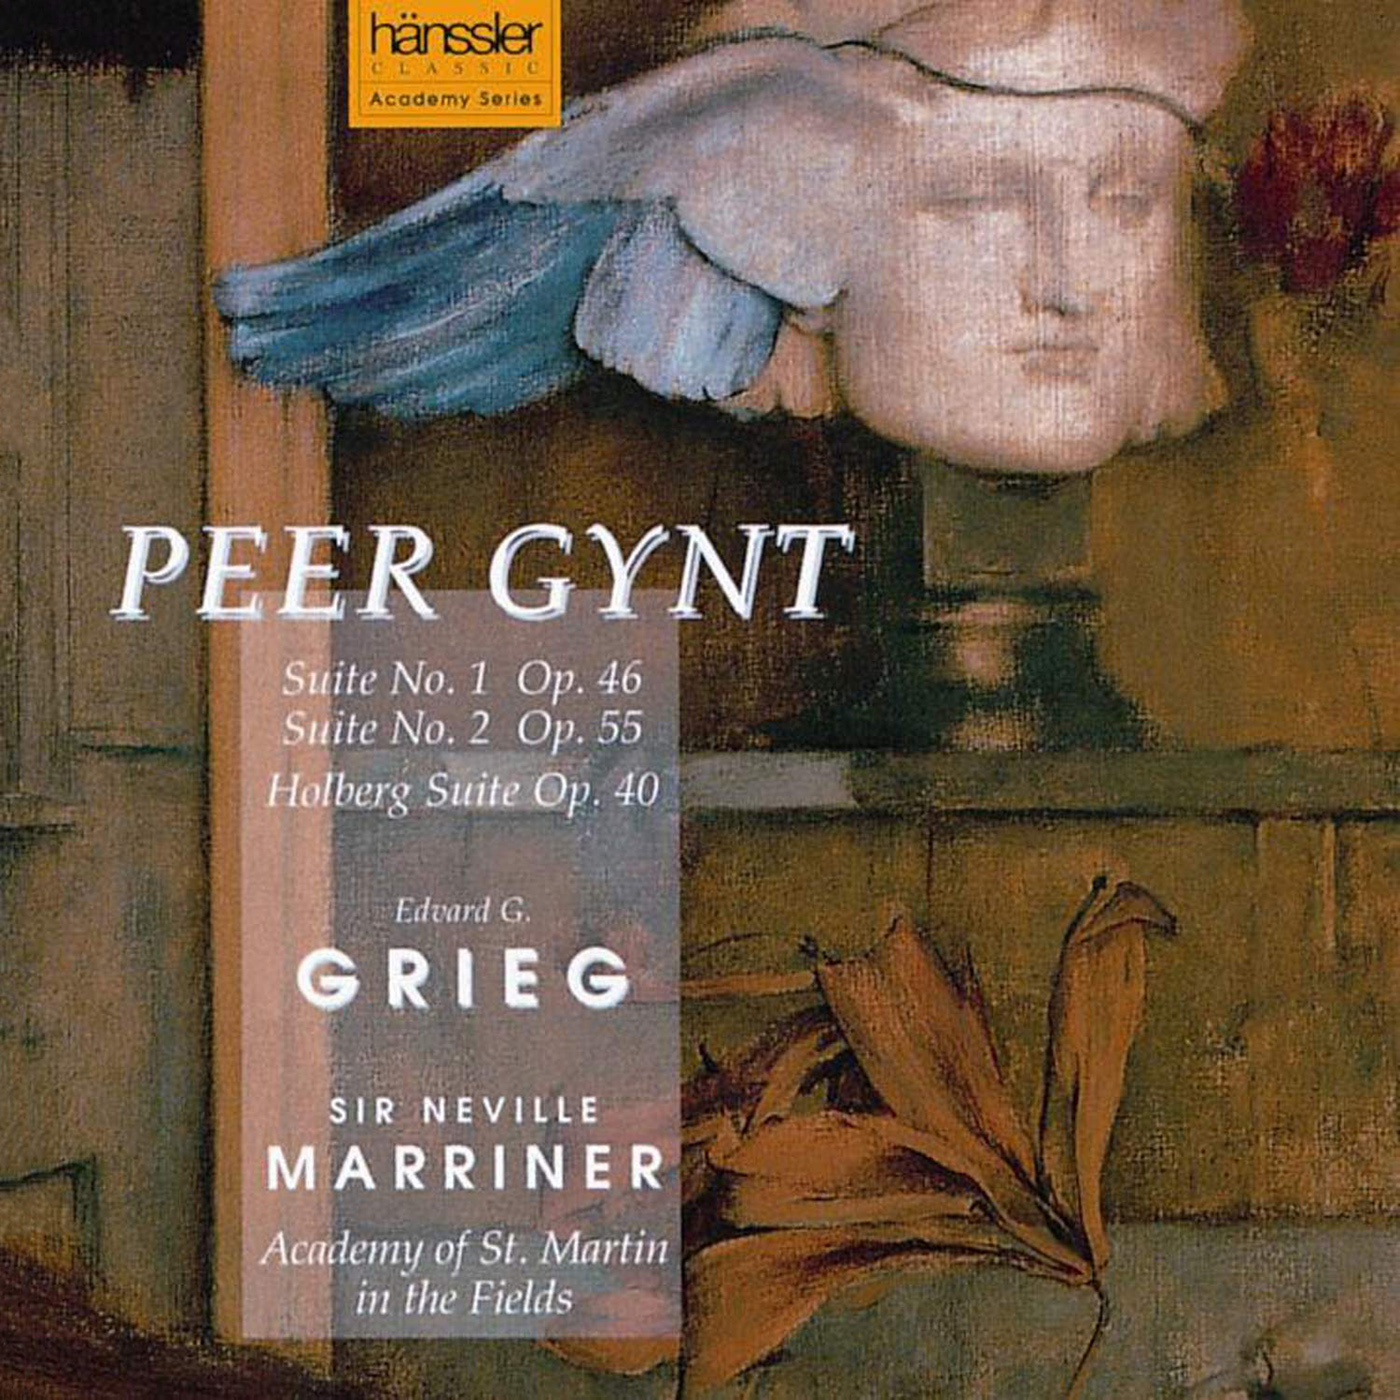 Peer Gynt Suite No. 1, Op. 46: I. Morning